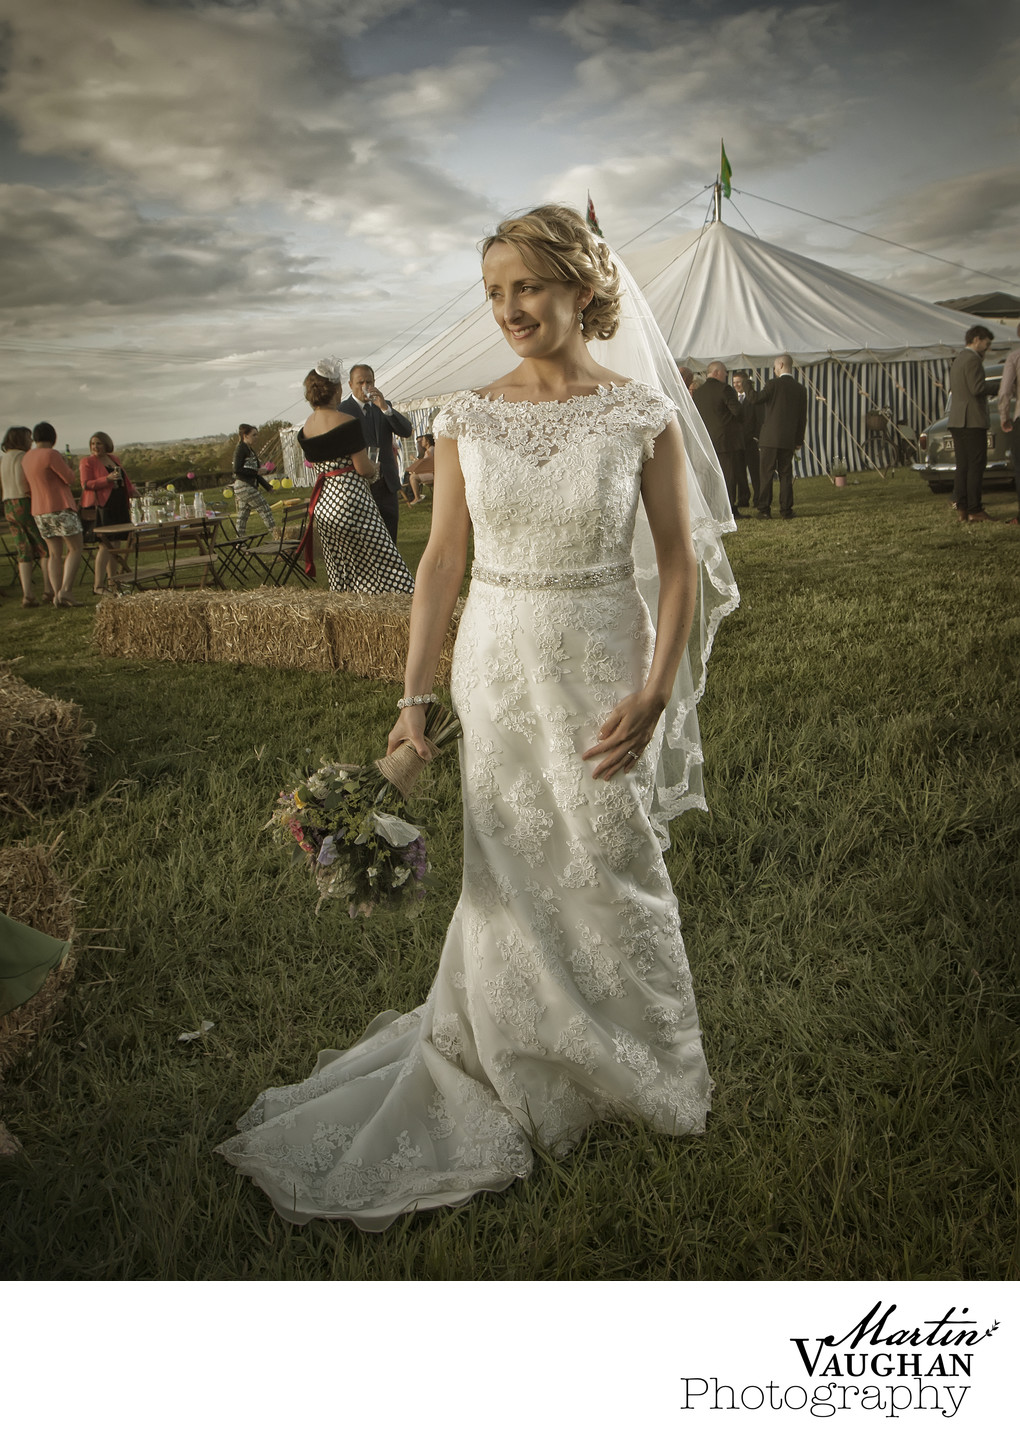 Wedding photography Caernarfon by Martin Vaughan